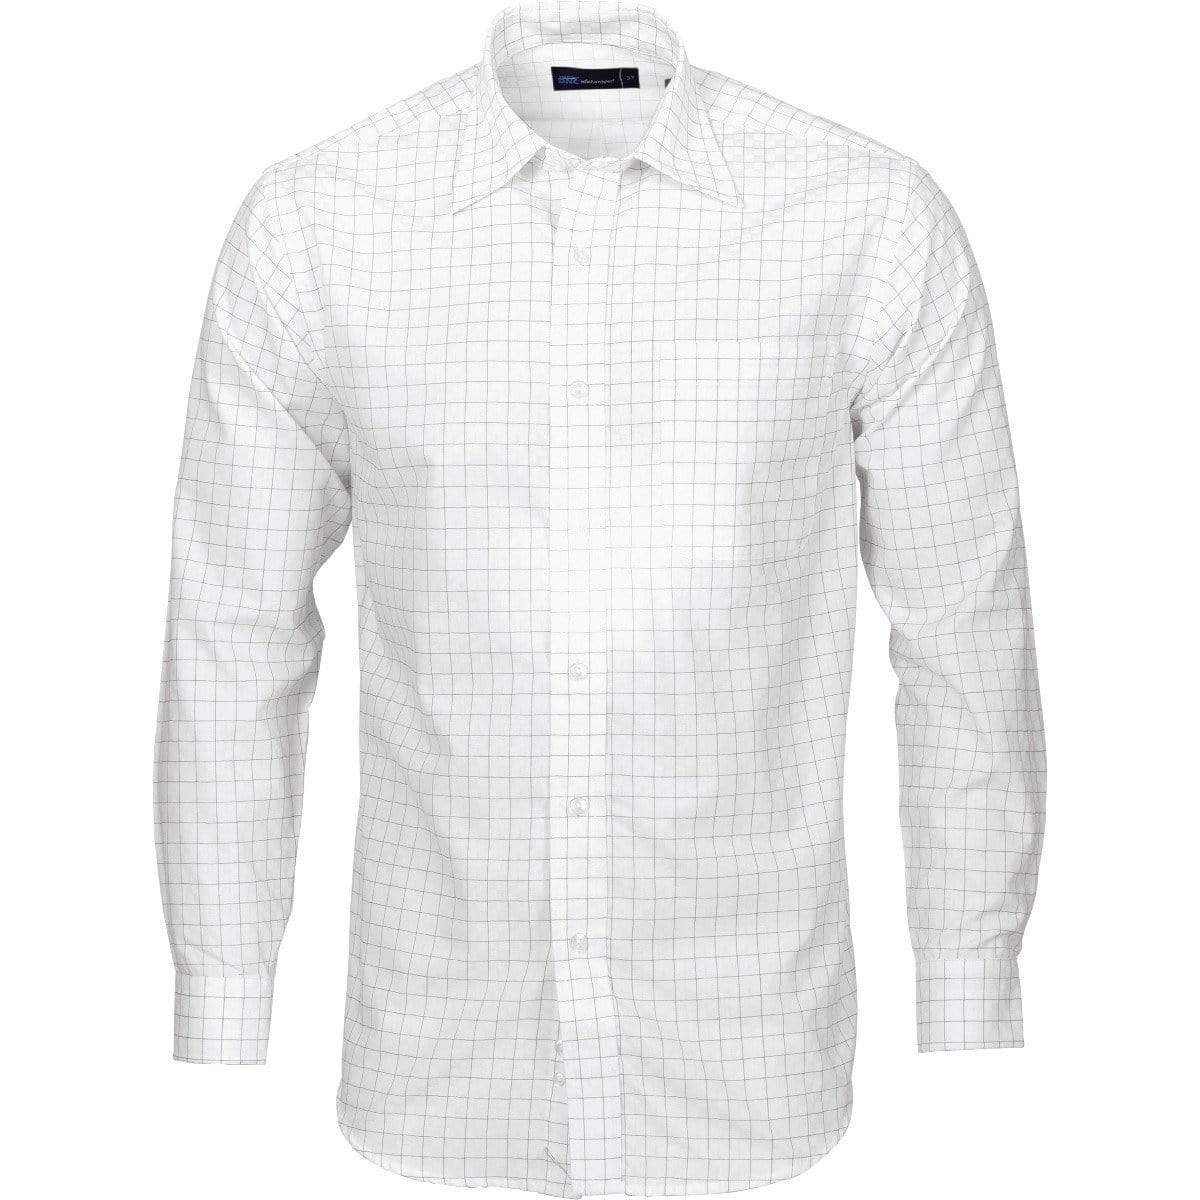 Dnc Workwear Men’s Yarn Dyed Long Sleeve Check Shirt - 4158 Corporate Wear DNC Workwear White/Blue 37 